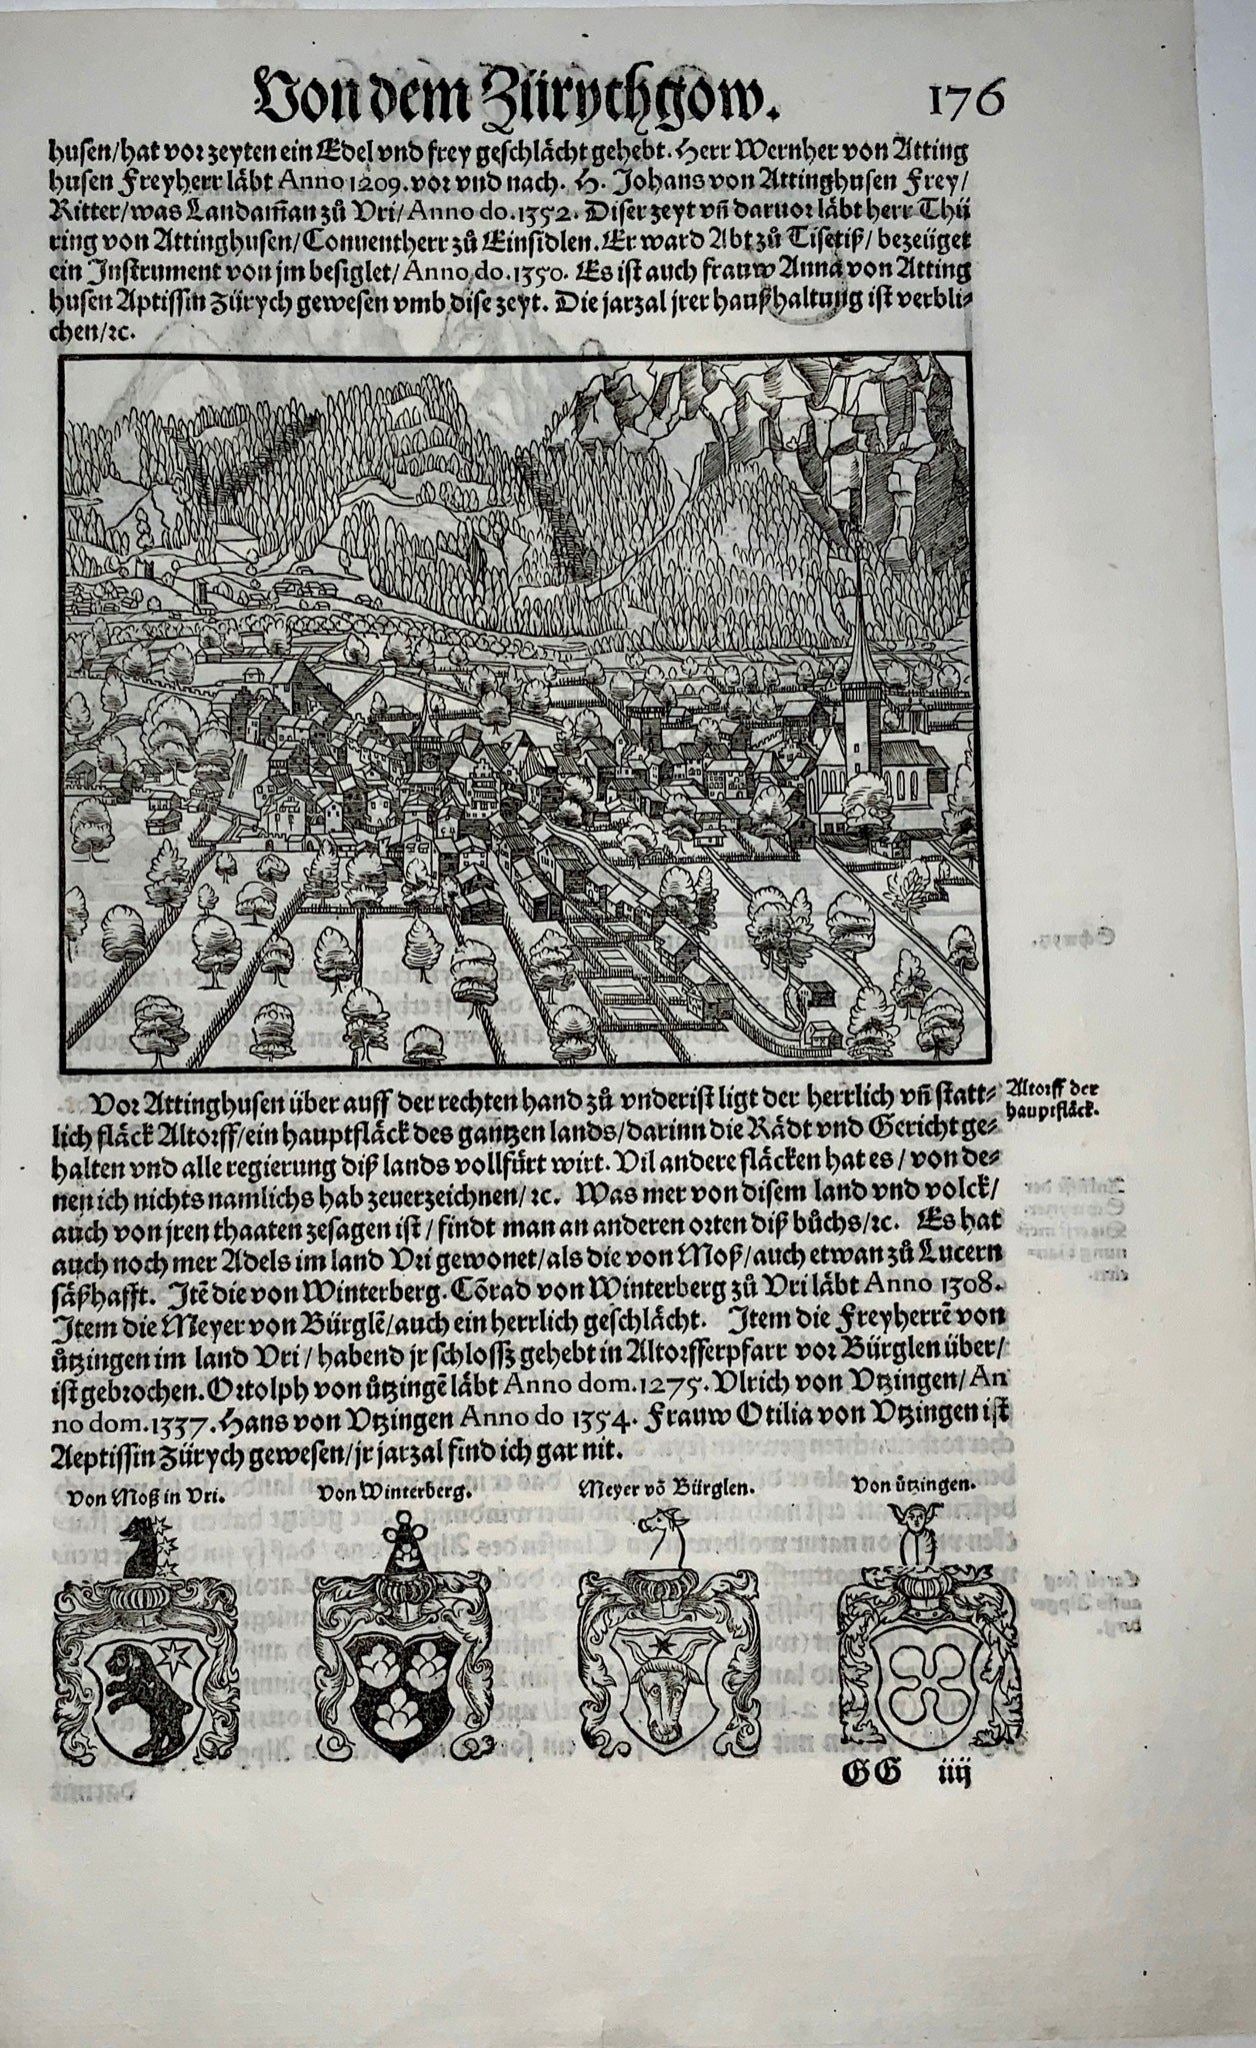 1548 Jean. Stumpf, Altdorf et Schwyz, Suisse, fine gravure sur bois Feuille